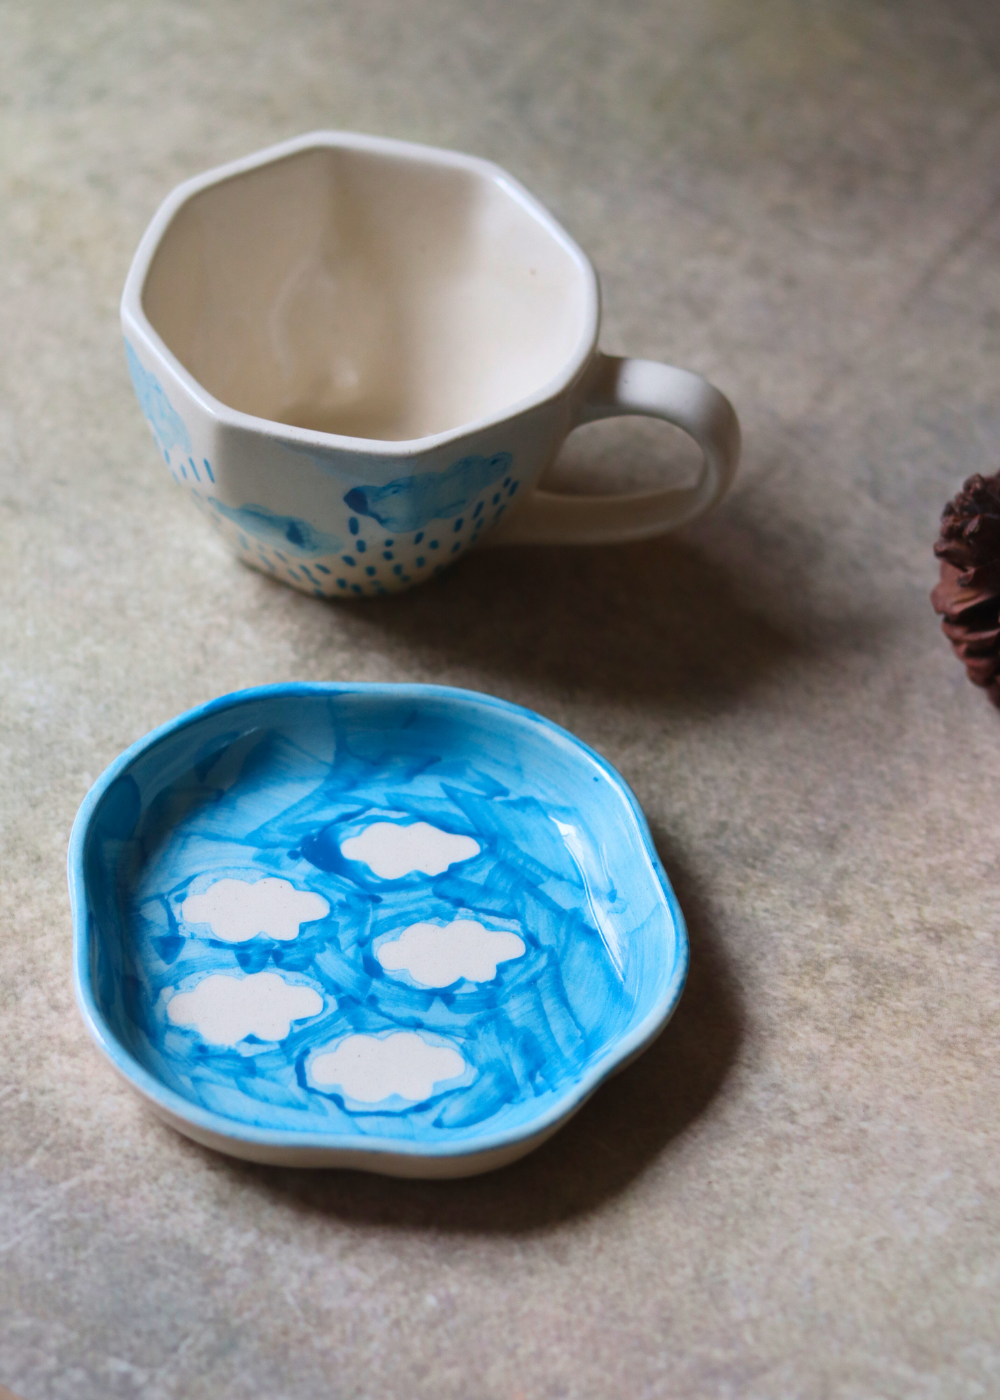 cloud mug & cloud dessert plate made by ceramic 